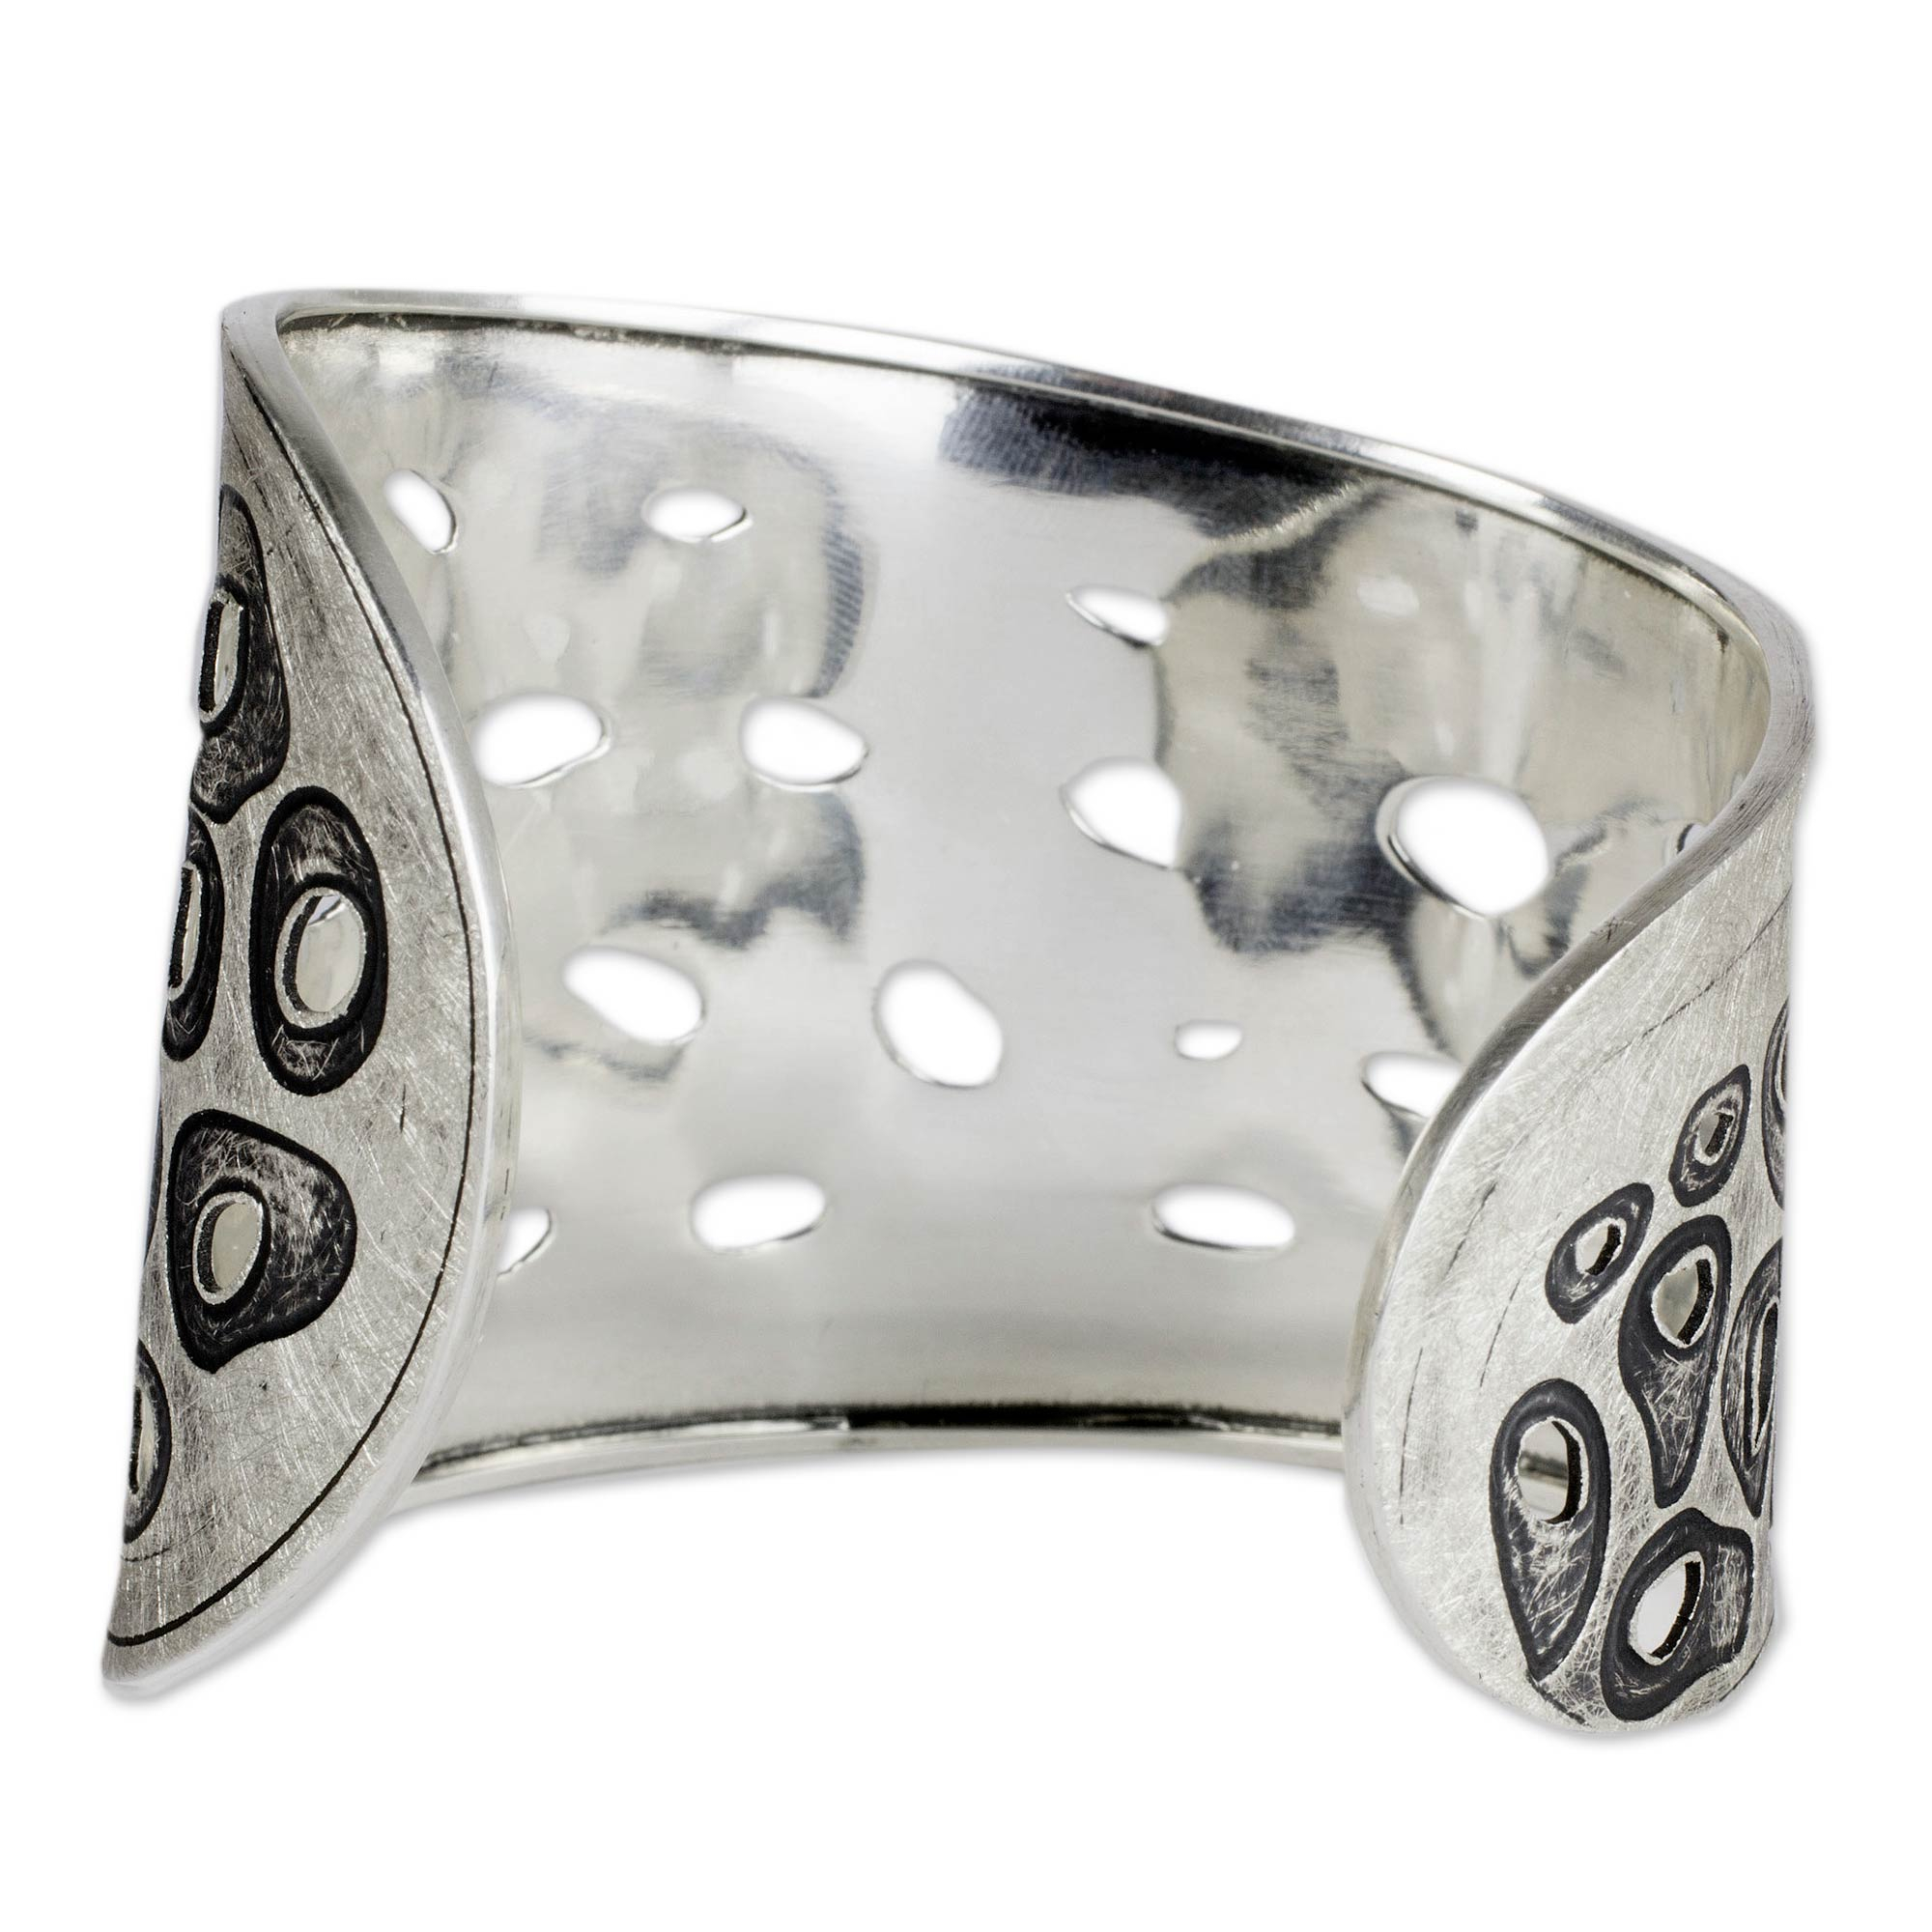 Surreal Sterling Silver Cuff Bracelet - Miro Inspiration | NOVICA